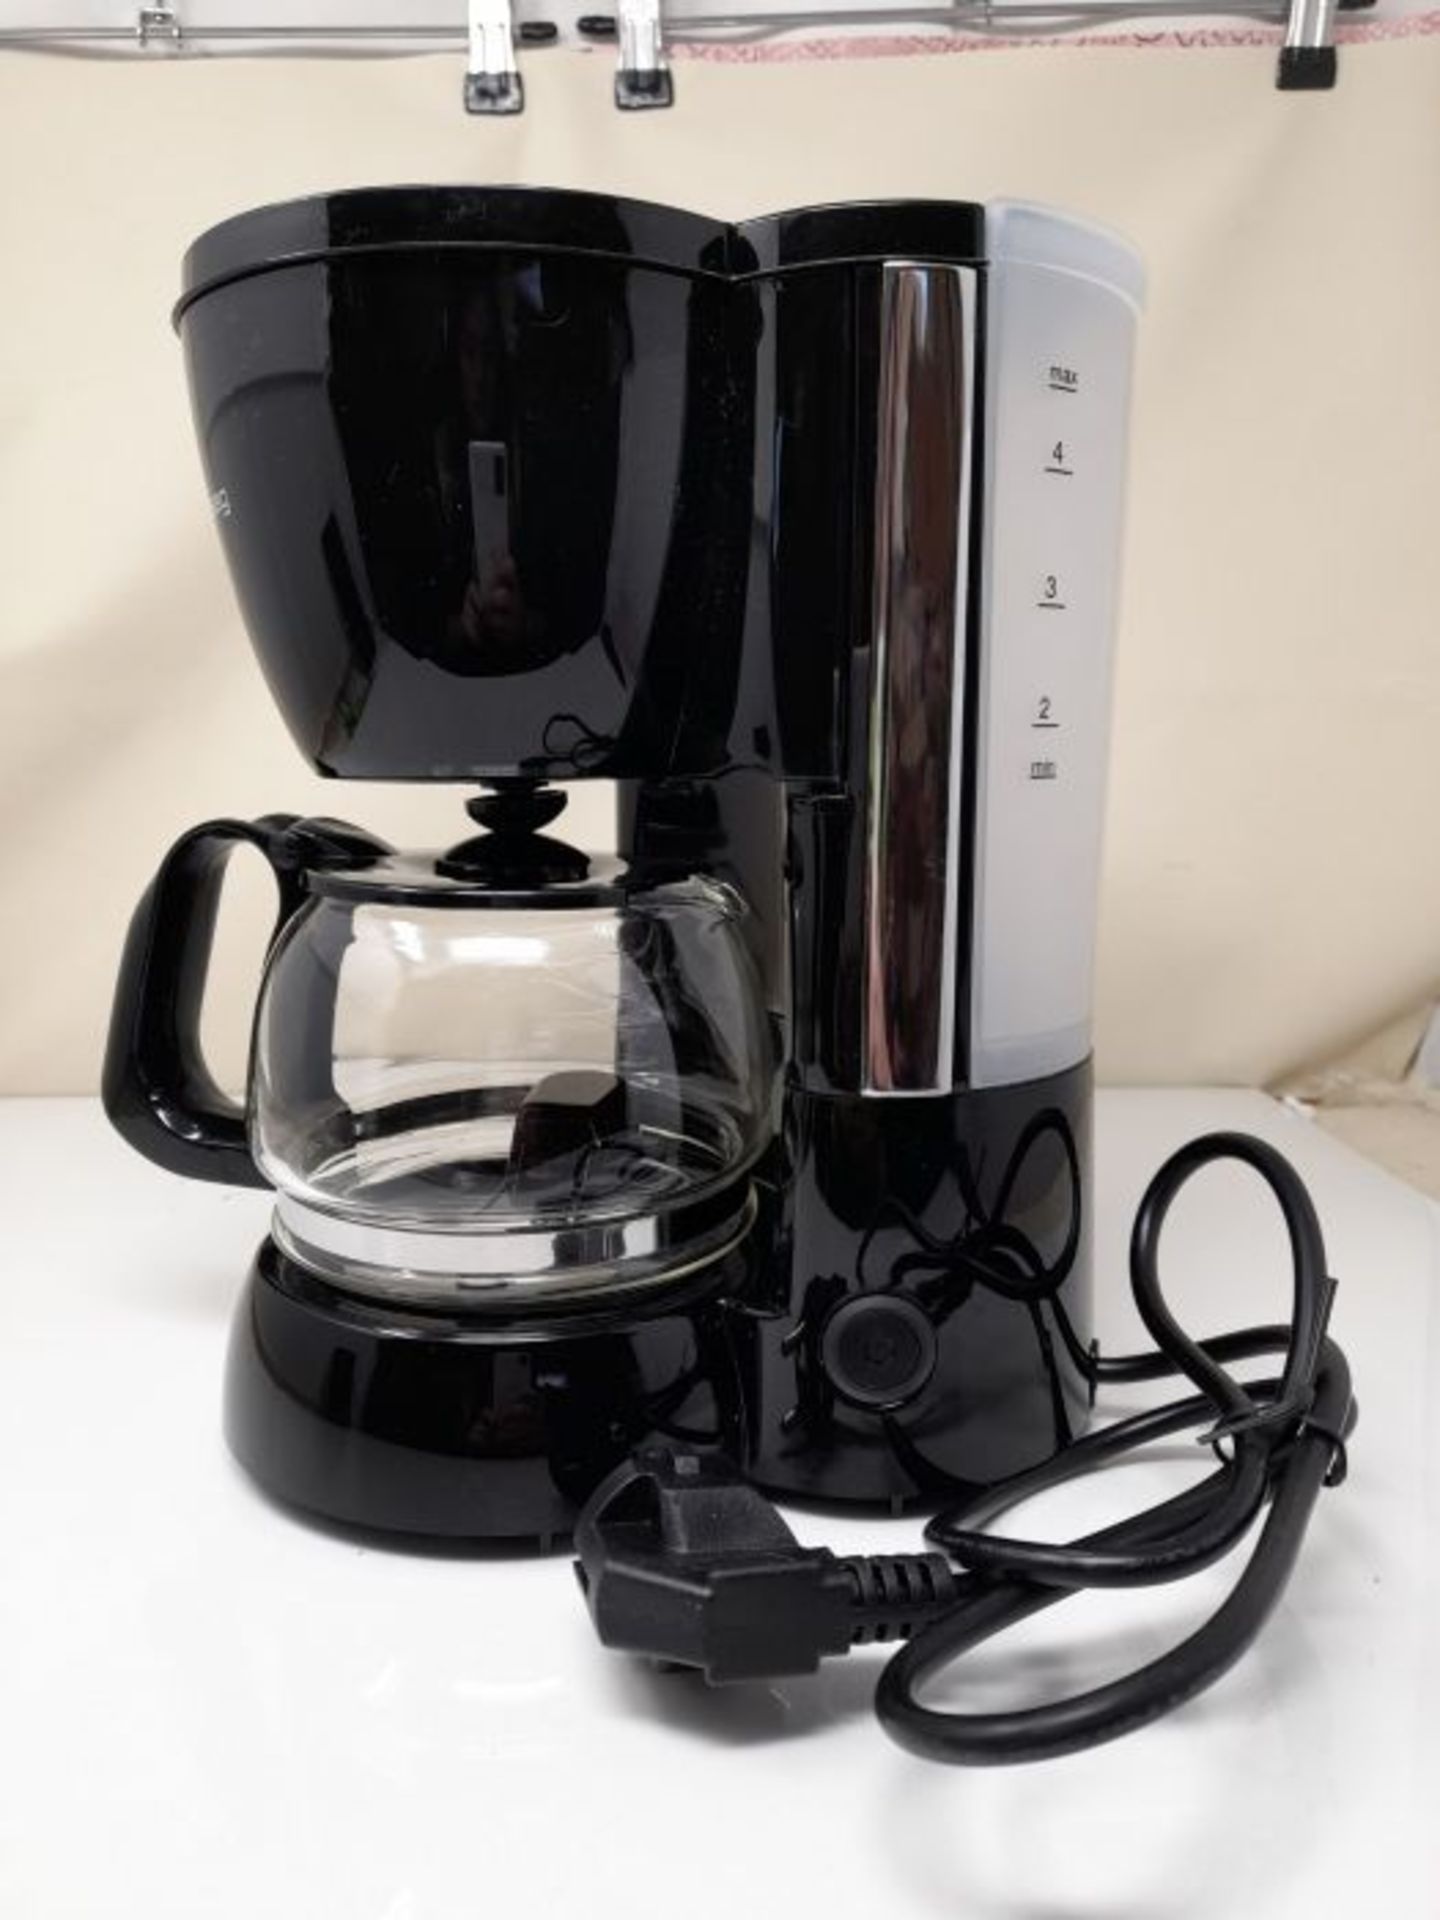 Grossag Kaffee-Automat KA 12.17Filtercoffee machine - Image 3 of 3